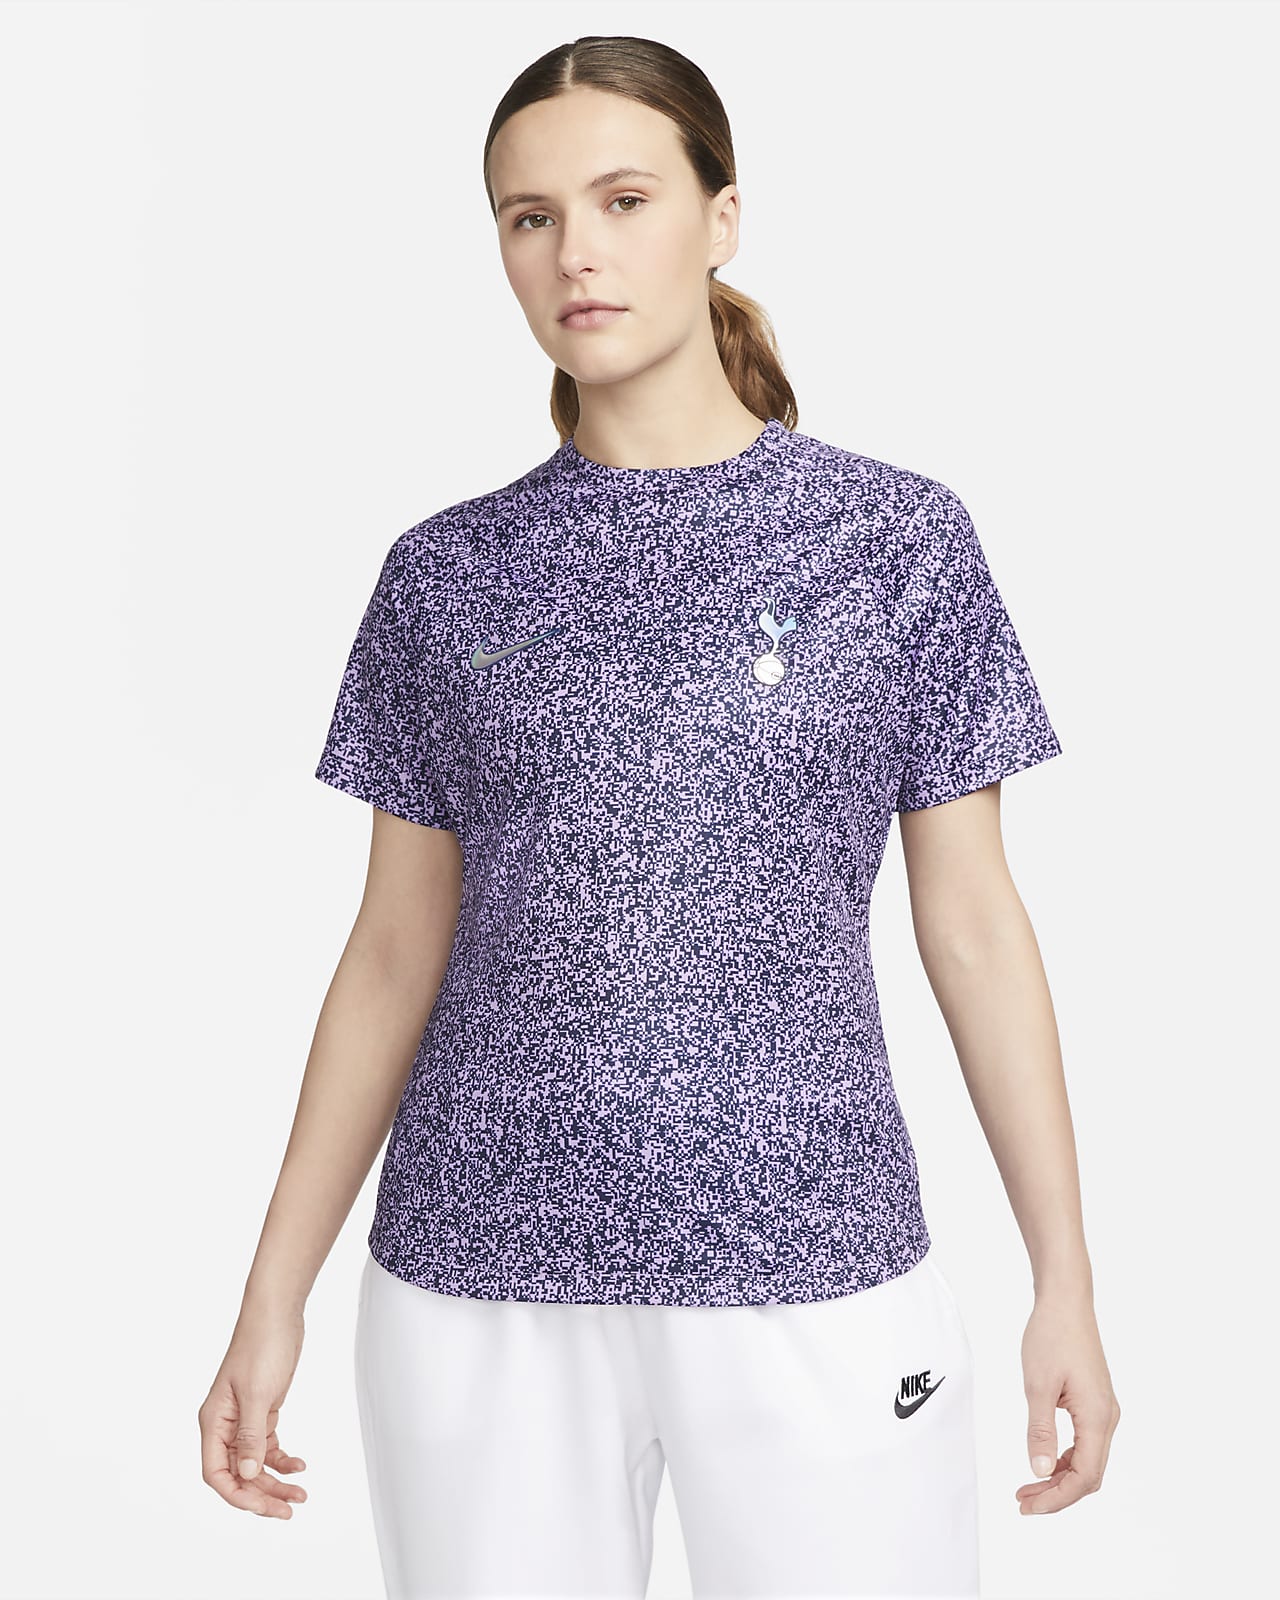 Tottenham Hotspur Academy Pro Nike Dri-FIT Pre-Match-fodboldtrøje til kvinder